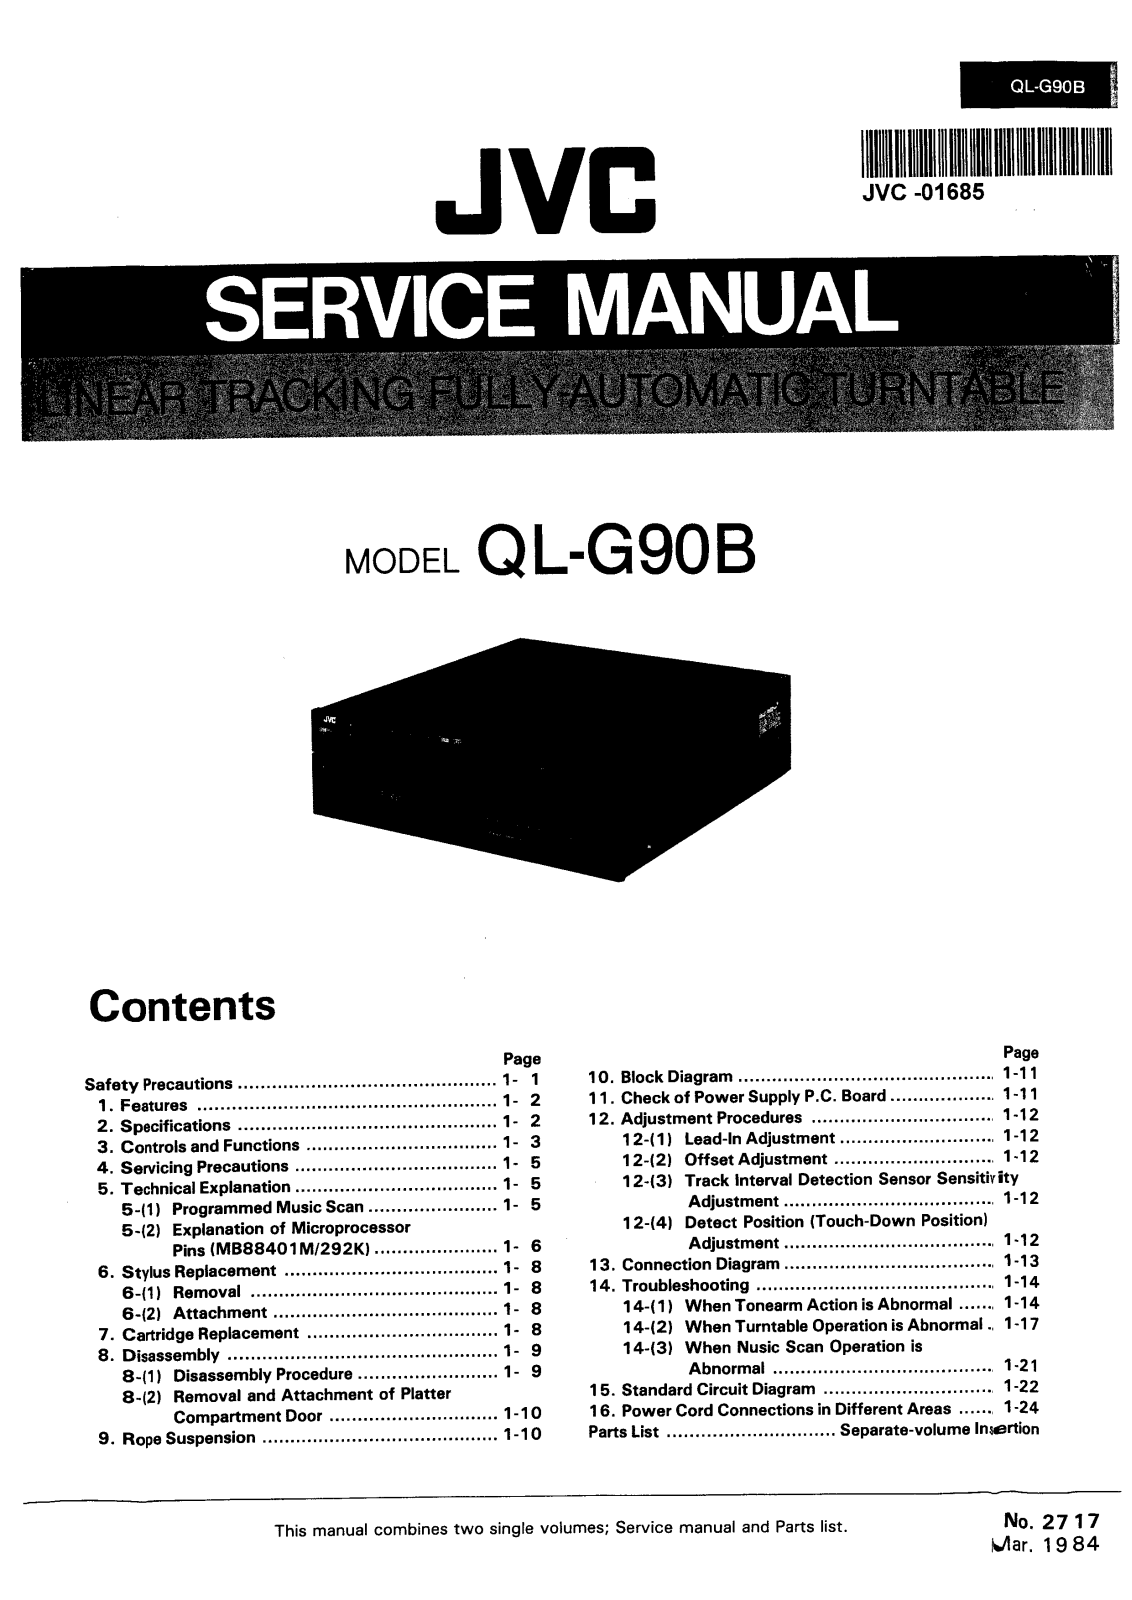 Jvc QL-G90-B Service Manual